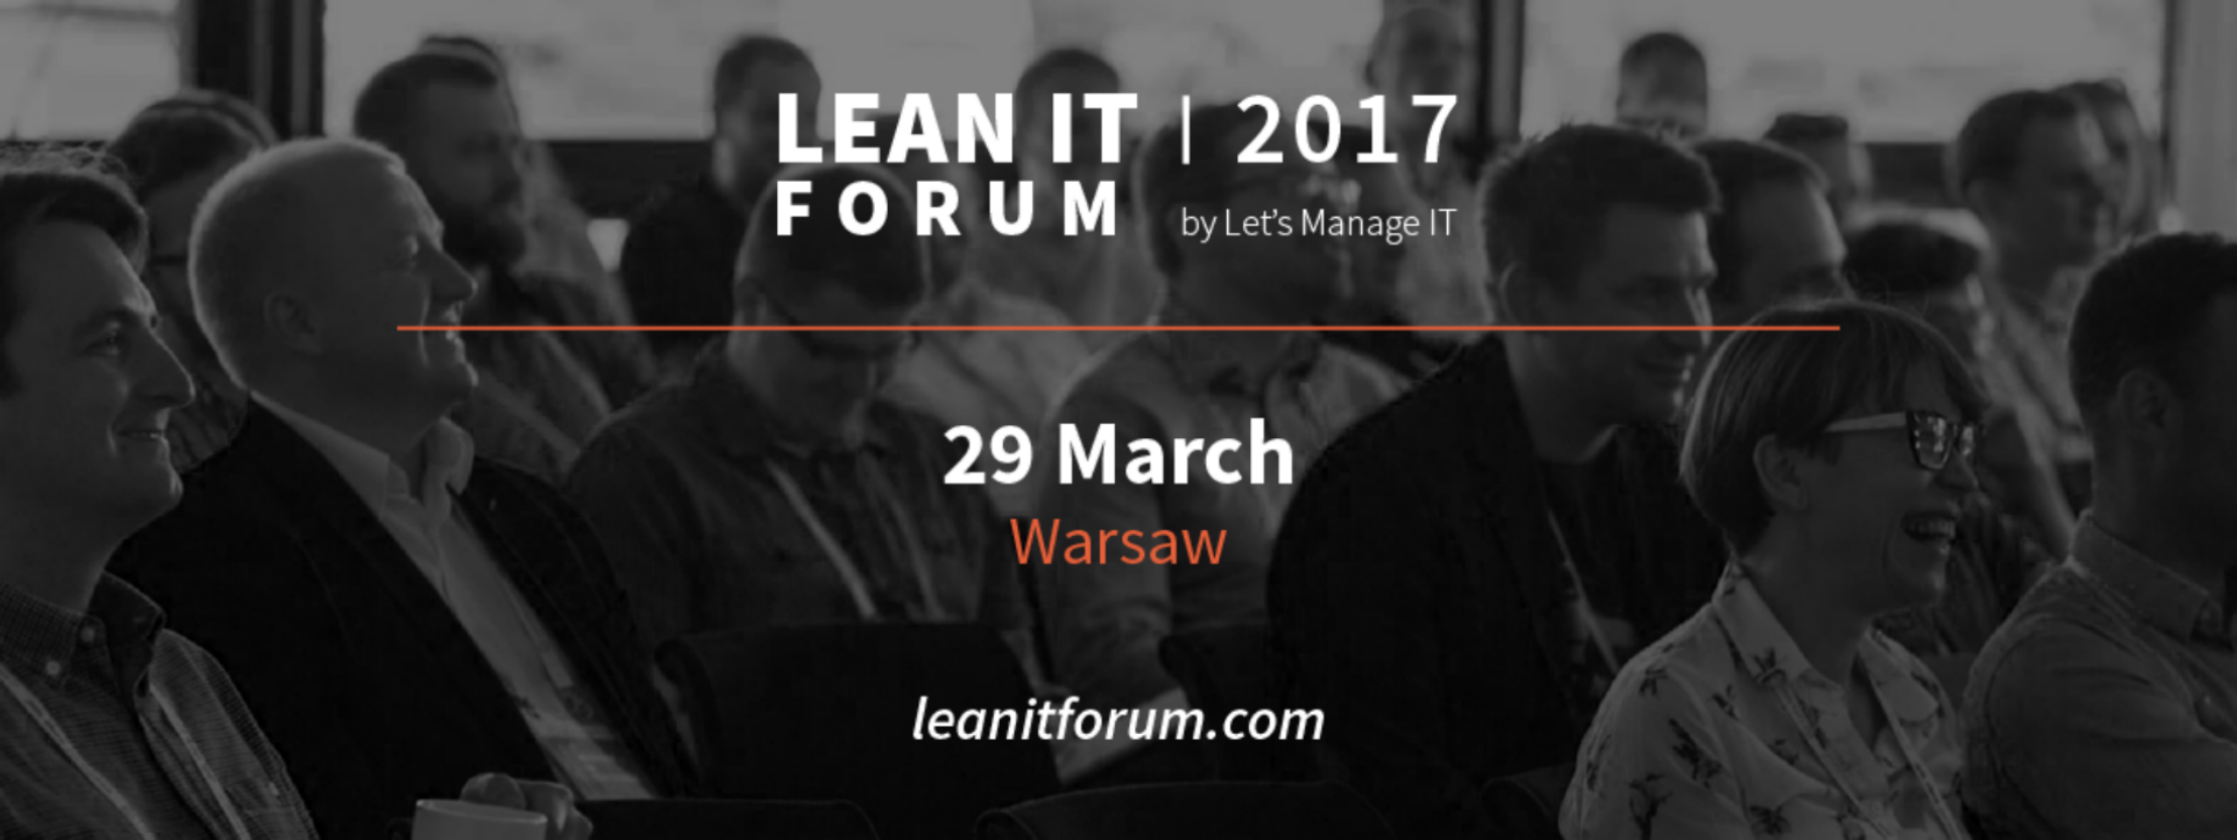 lean-it-forum-2017